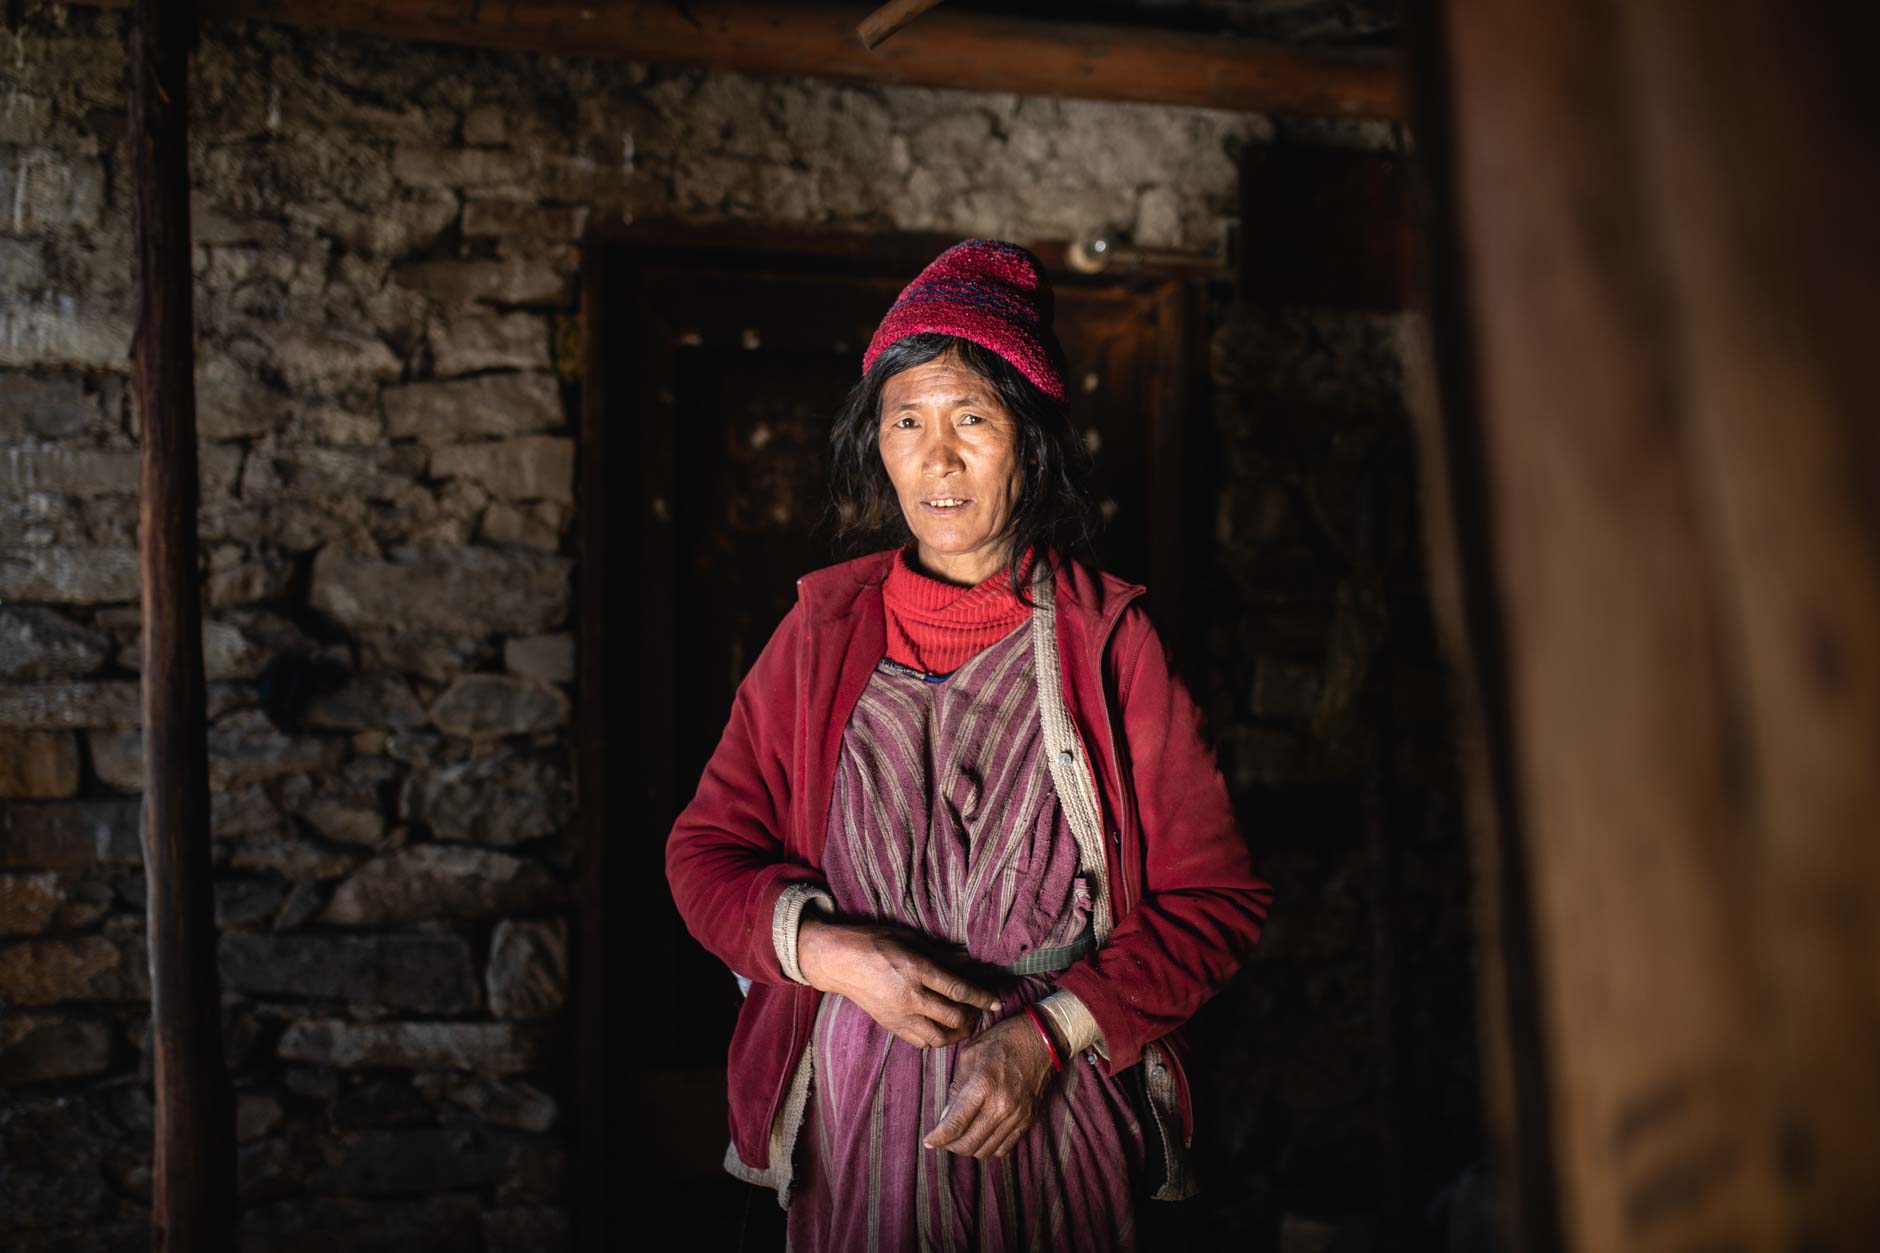 Portrait photography of a tribeswoman in the village of Merak, Bhutan